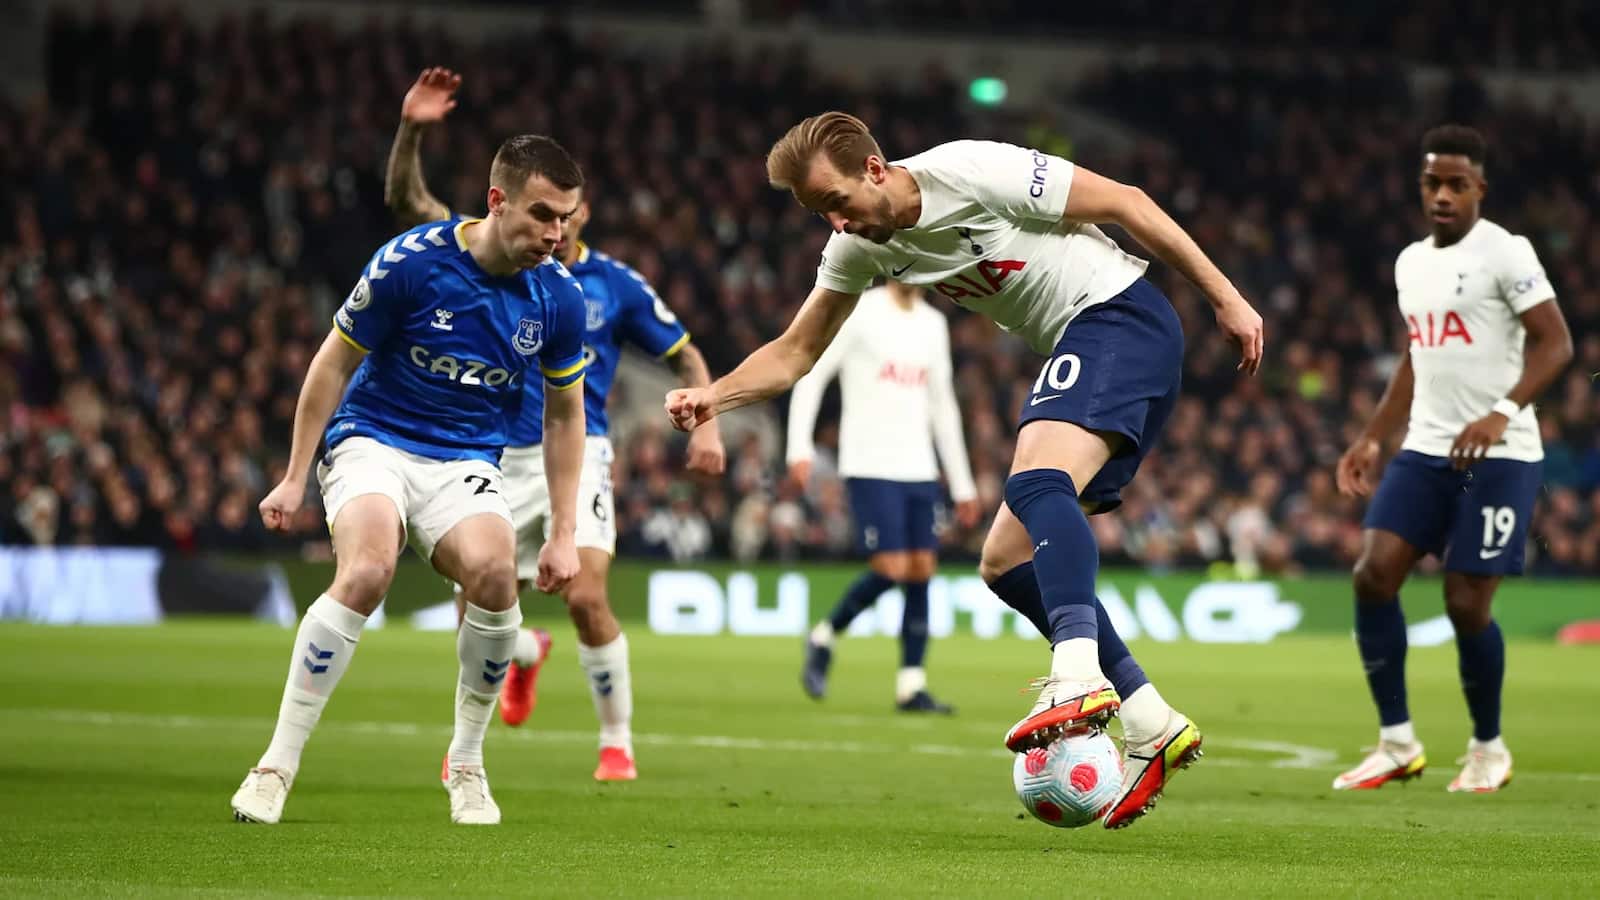 Watch Everton vs. Tottenham Live Stream English Premier League Soccer from Anywhere